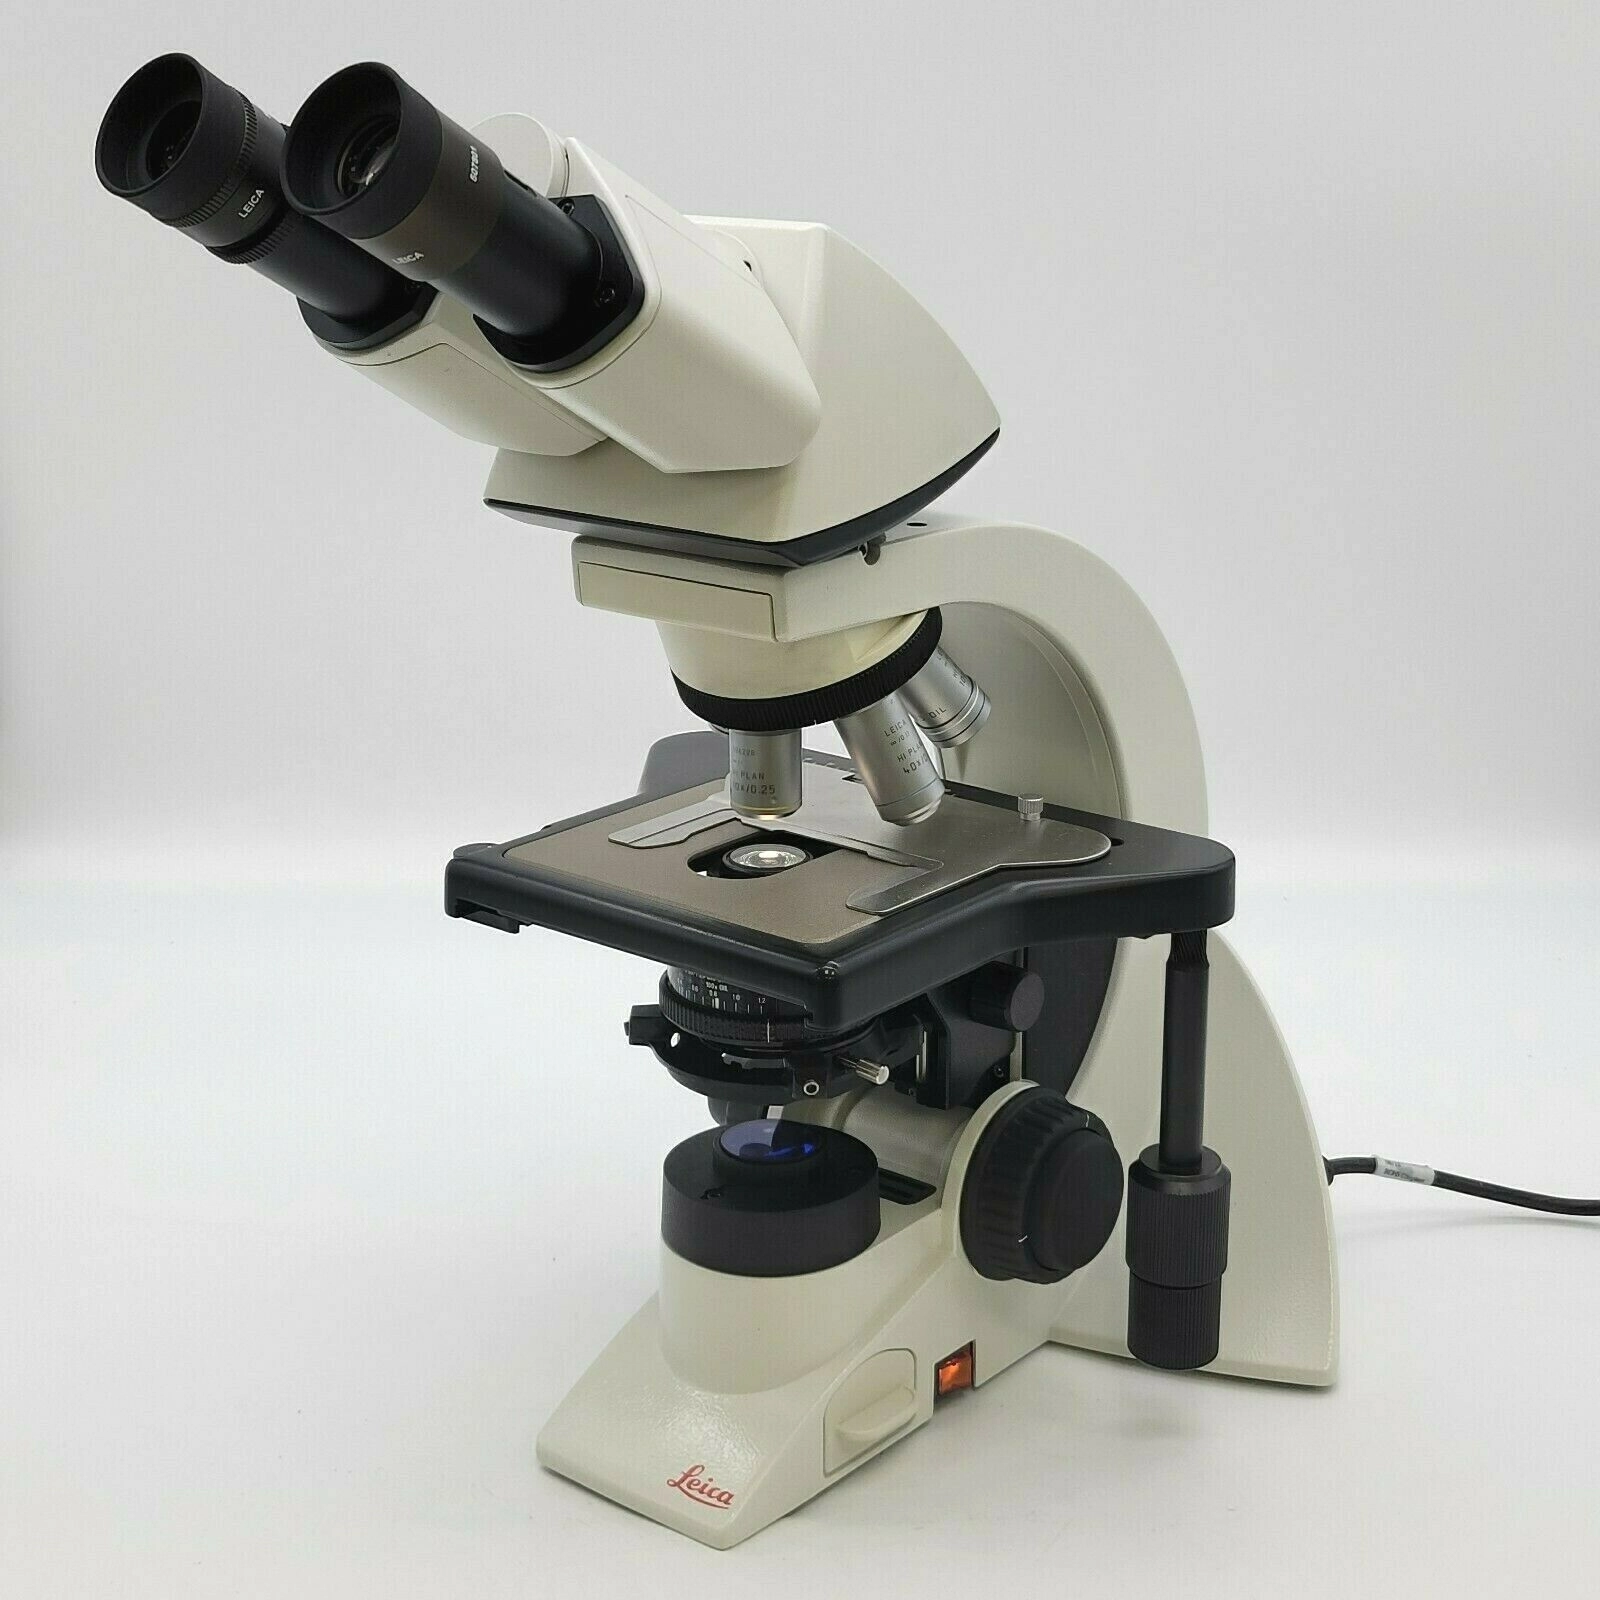 Leica Microscope DM1000 with Binocular Head and 4x, 10x, 40x, 100x Objectives